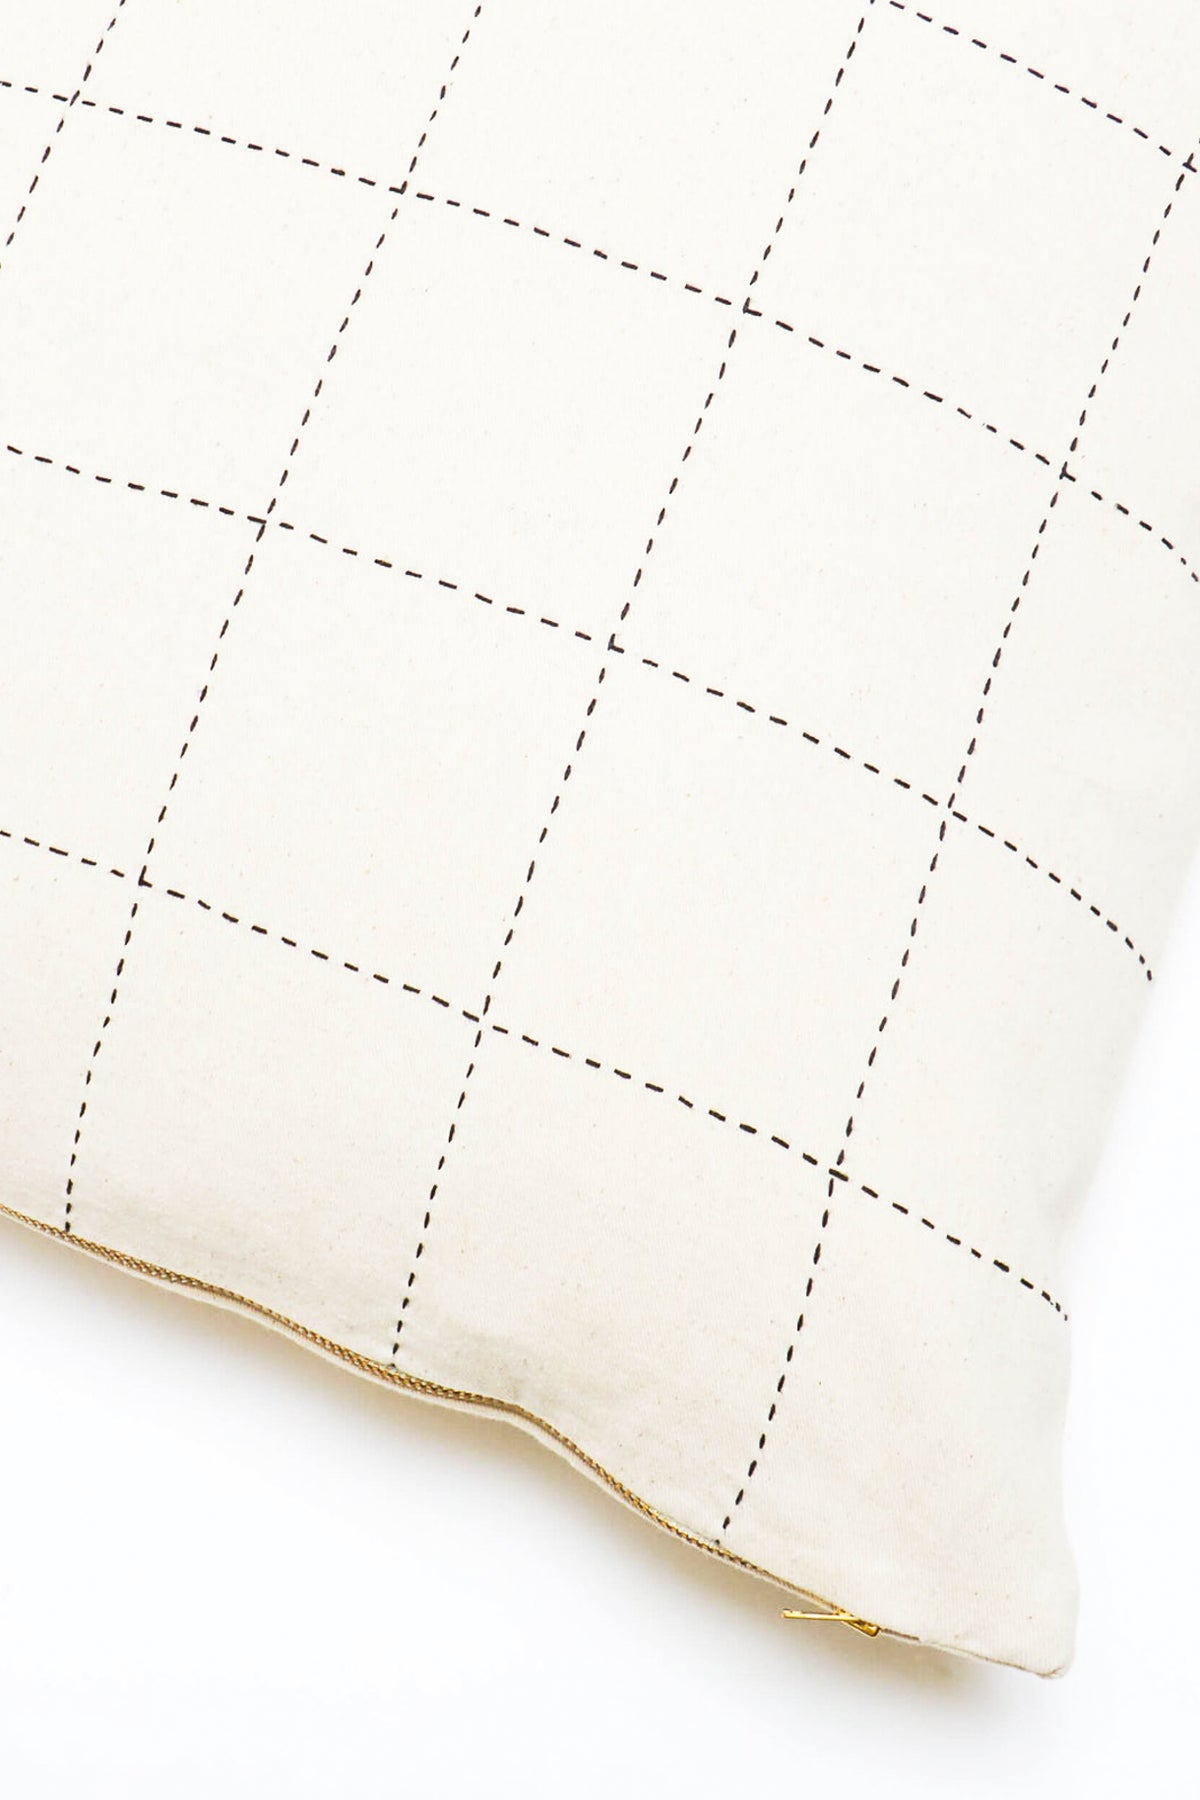 Anchal Project Medium Bone Grid Stitch Pillow Cover